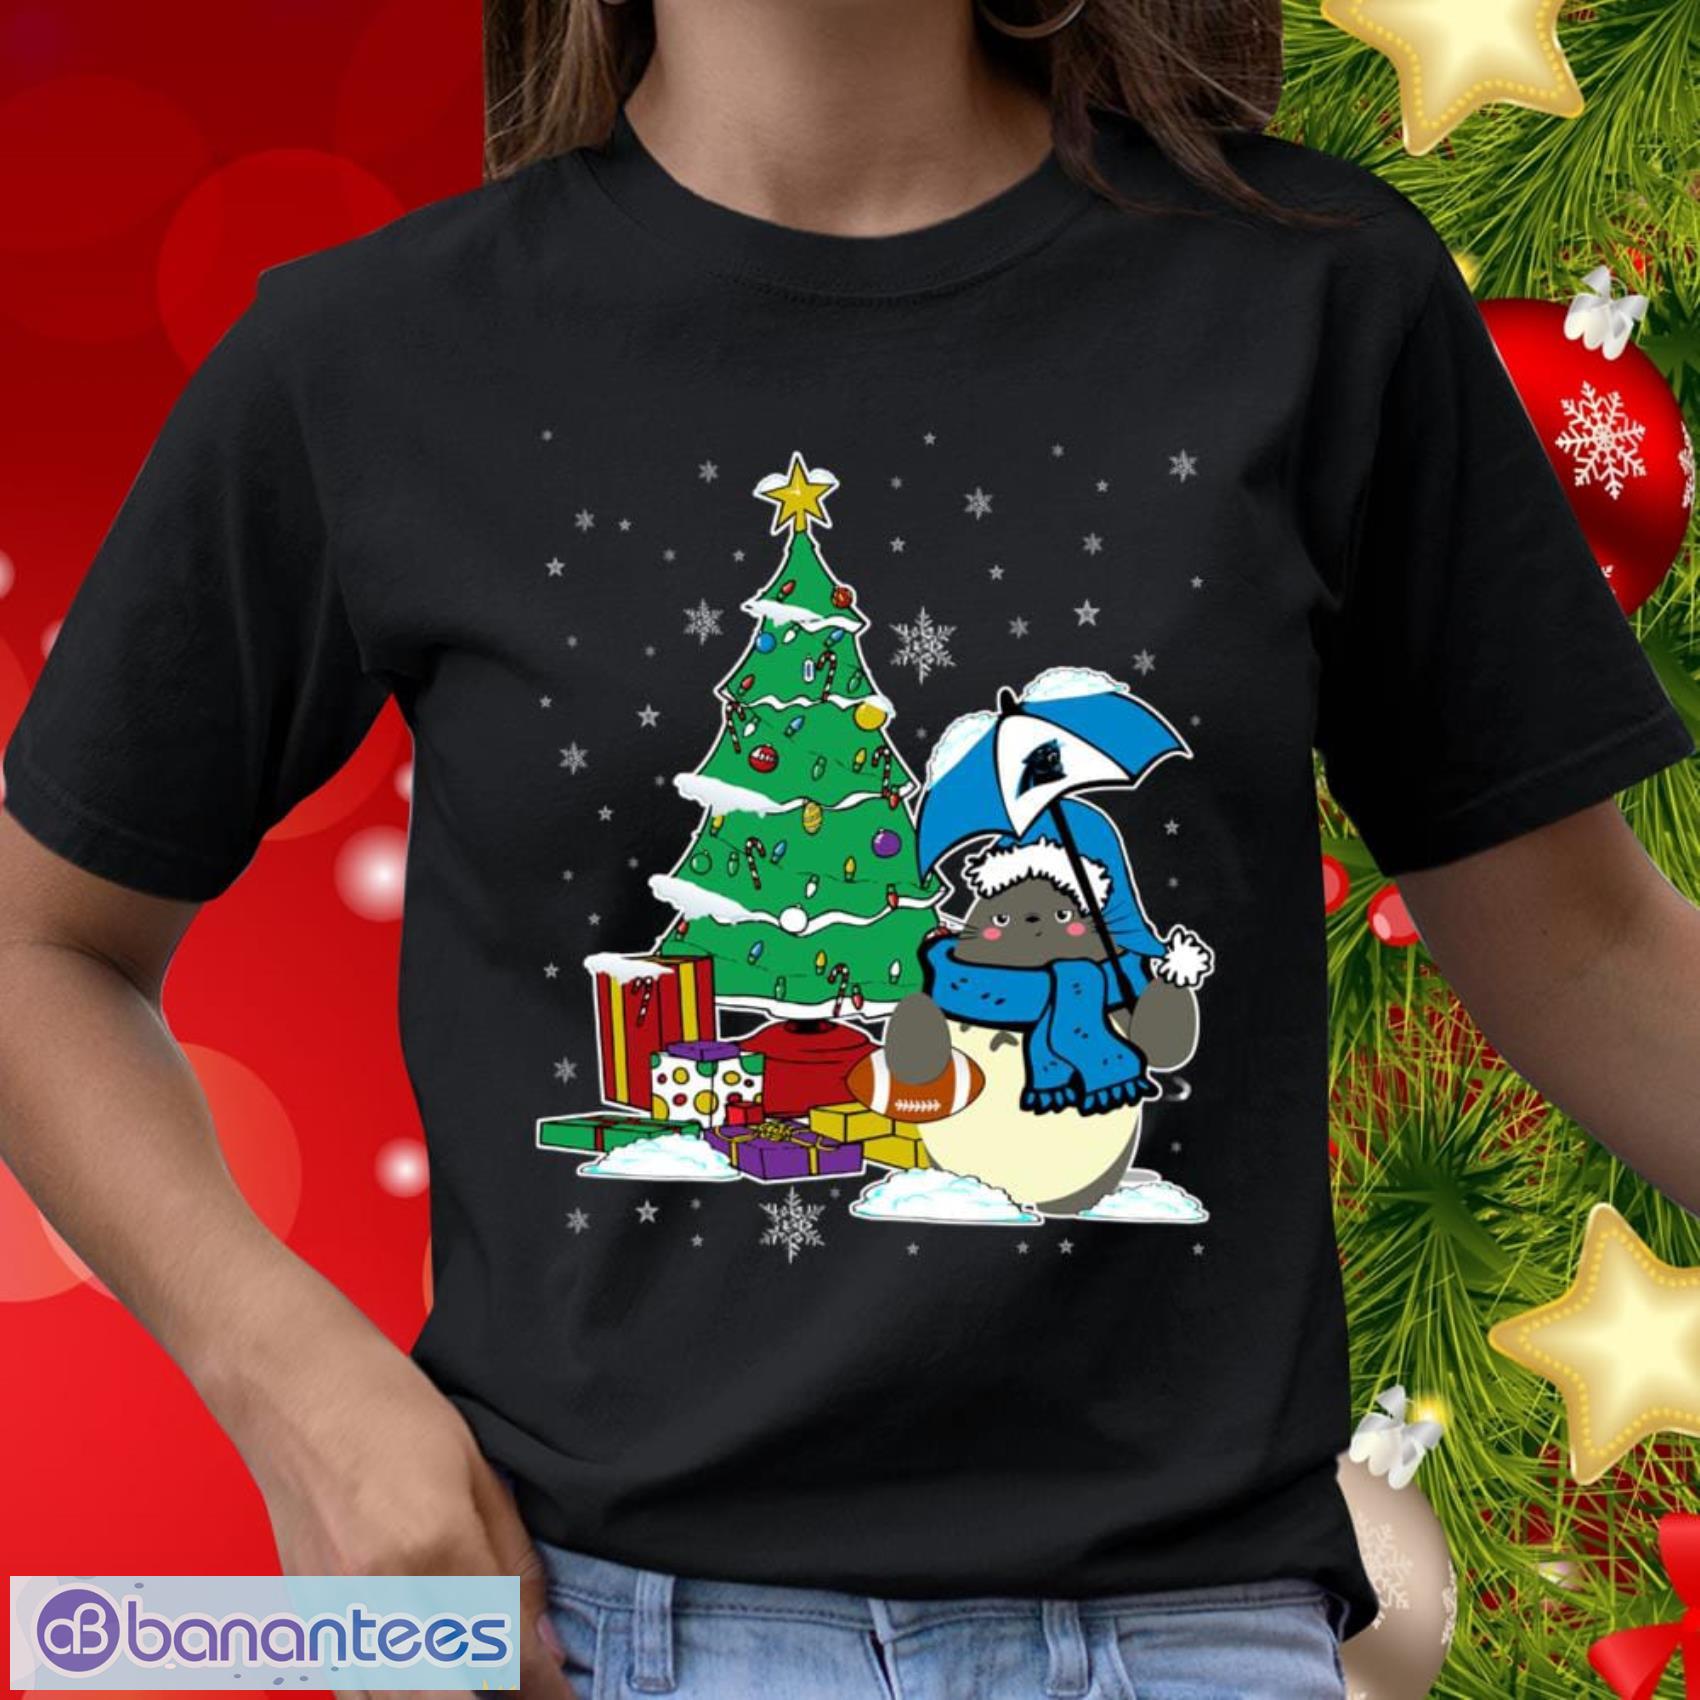 Carolina Panthers NFL Football Gift Fr Fans Cute Tonari No Totoro Christmas Sports T Shirt - Carolina Panthers NFL Football Cute Tonari No Totoro Christmas Sports T Shirt_2